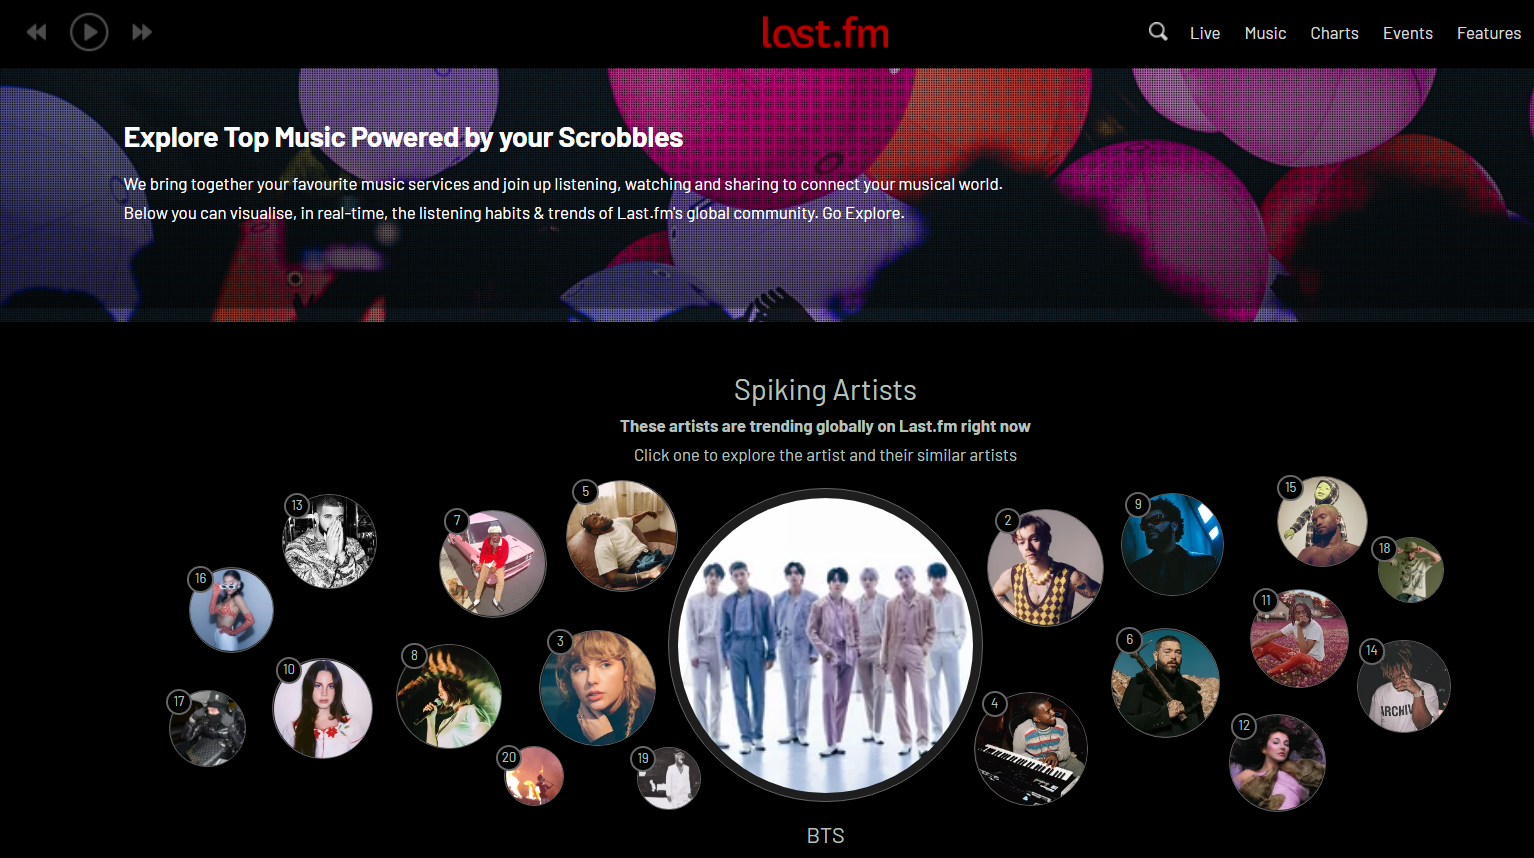 Last.fm | Play music, find songs, and discover artistsLast.fm 공식페이지. 사용자가 청취한 음악 데이터를 기반으로 사용자 맞춤 라이브러리는 물론, 추천 플레이리스트까지 생성이 가능하다.   